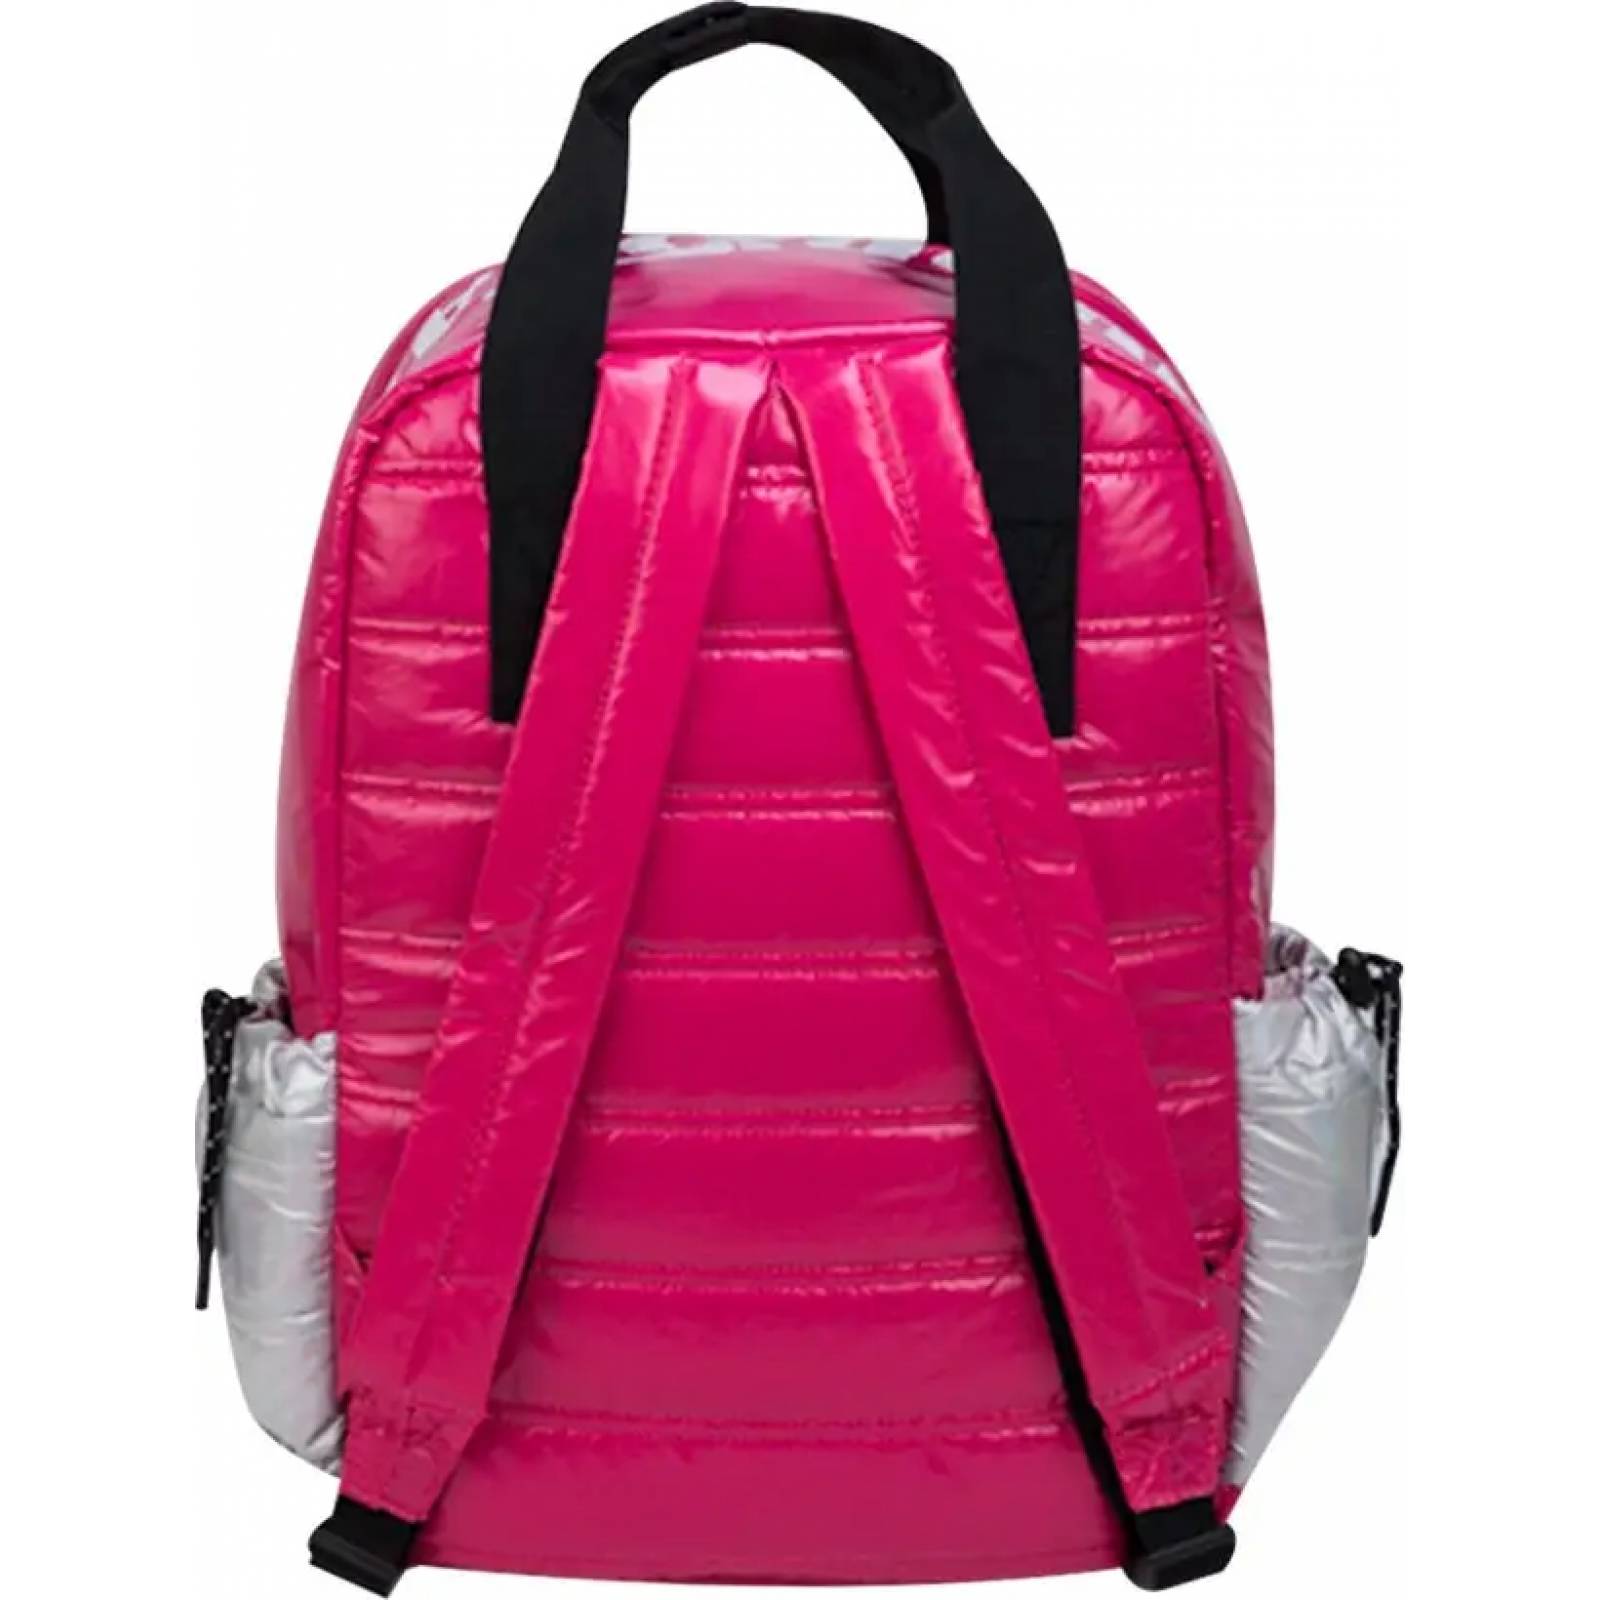 Mochila backpack para mujer color morado, marca Goodyear, mod. 1088203